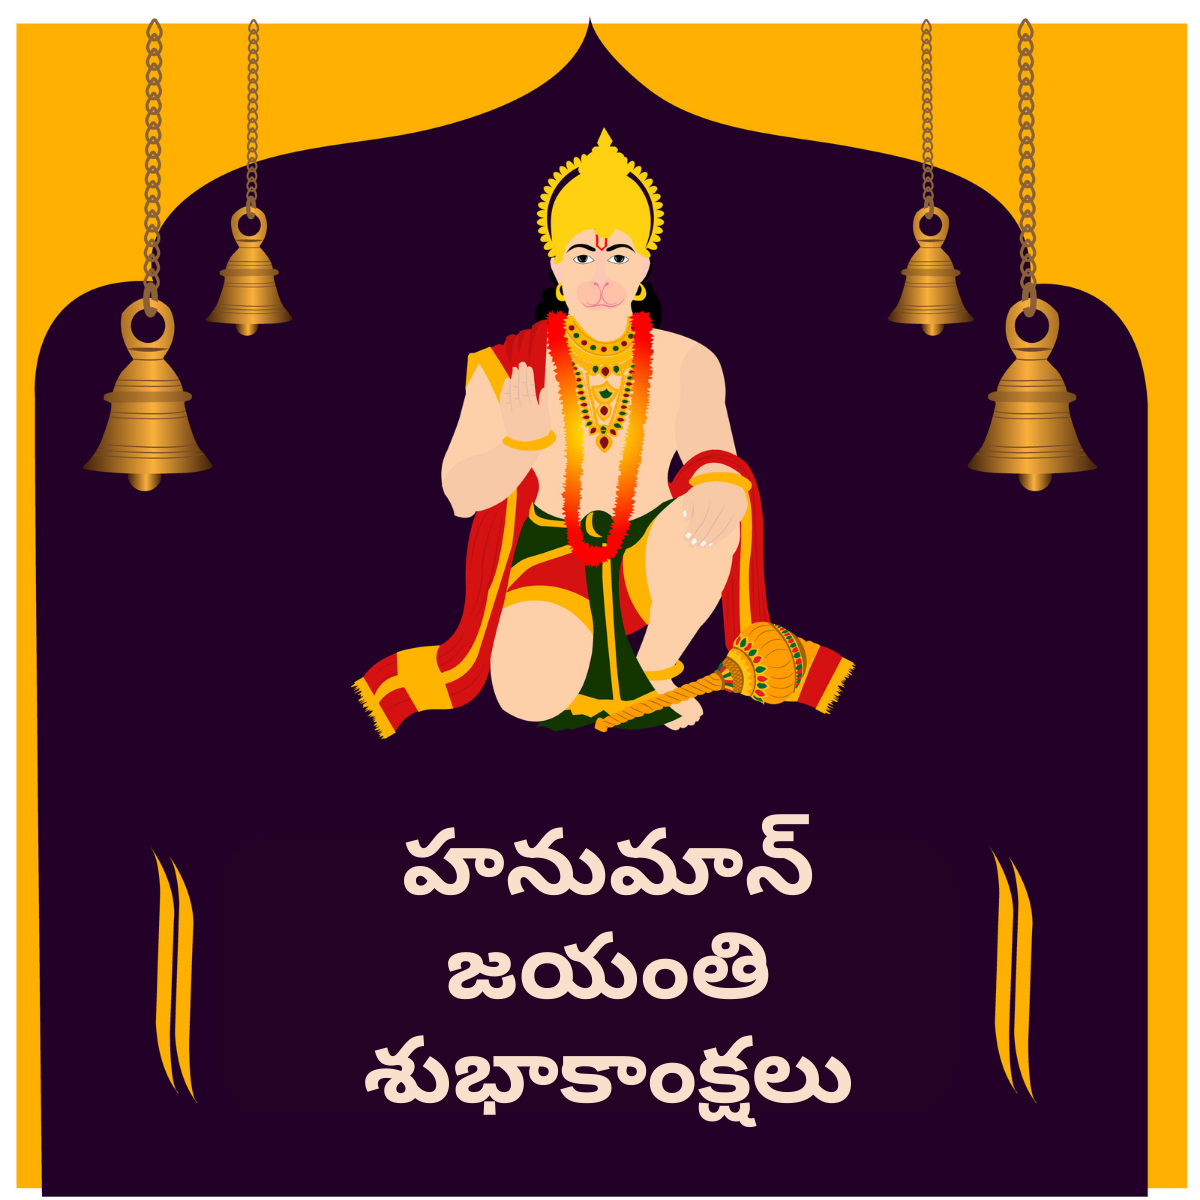 Happy Hanuman Jayanti 2023 Messages in Telugu, Wishes, Images, Quotes, Sayings, Shayari and Greetings